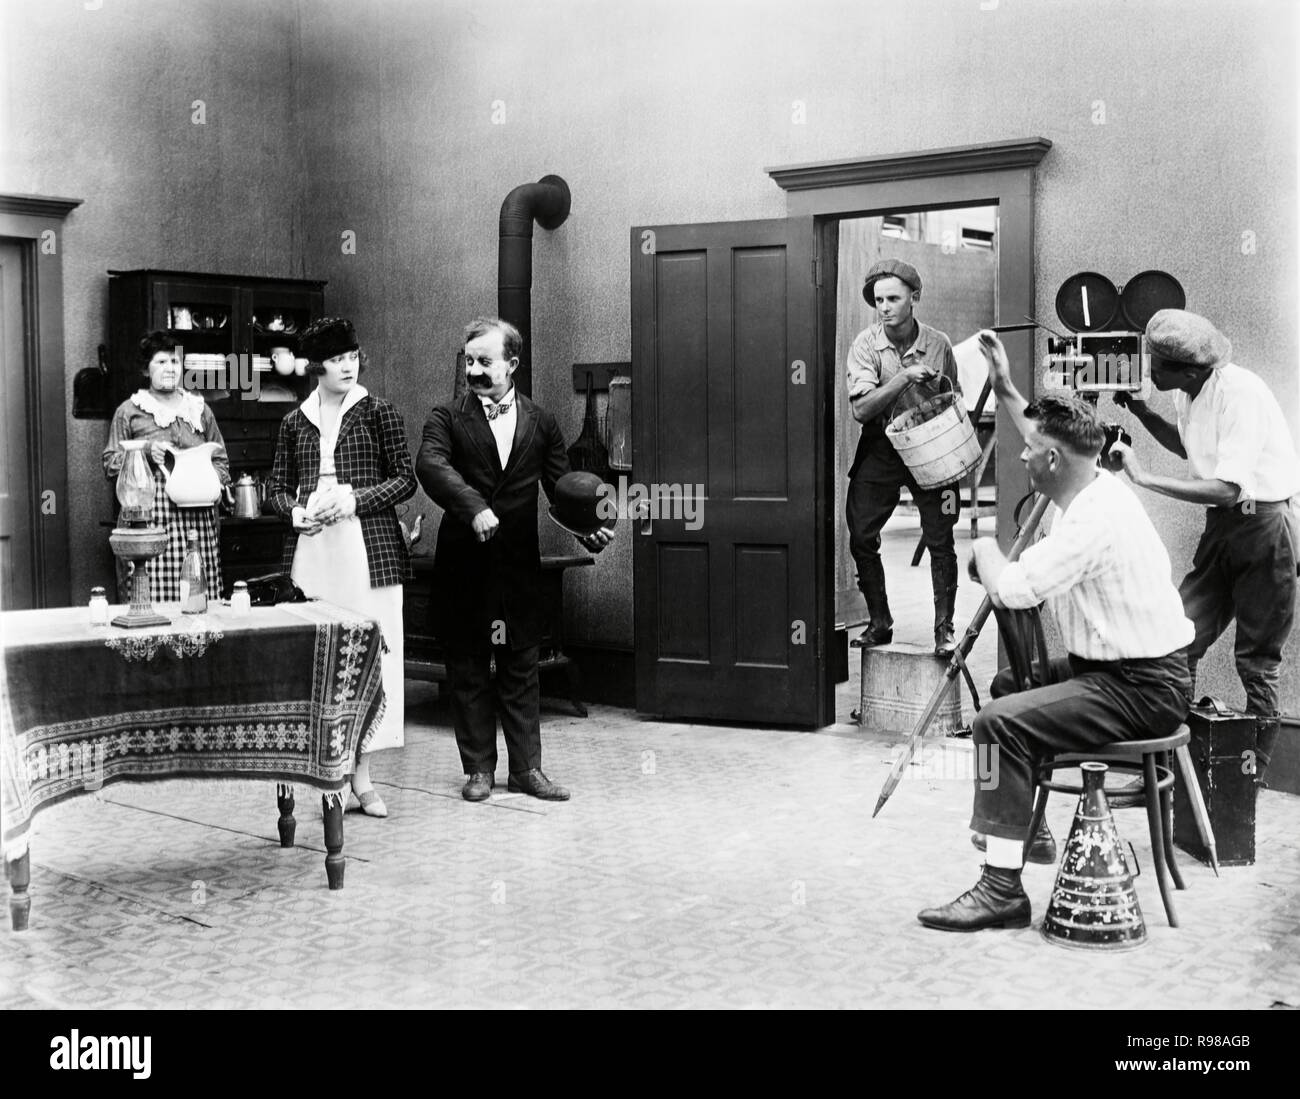 Mack Sennett Comedies Corporation movie shooting. Original film title: MACK SENNETT COMEDY. English title: MACK SENNETT COMEDY. Stars: CHESTER CONKLIN. Stock Photo